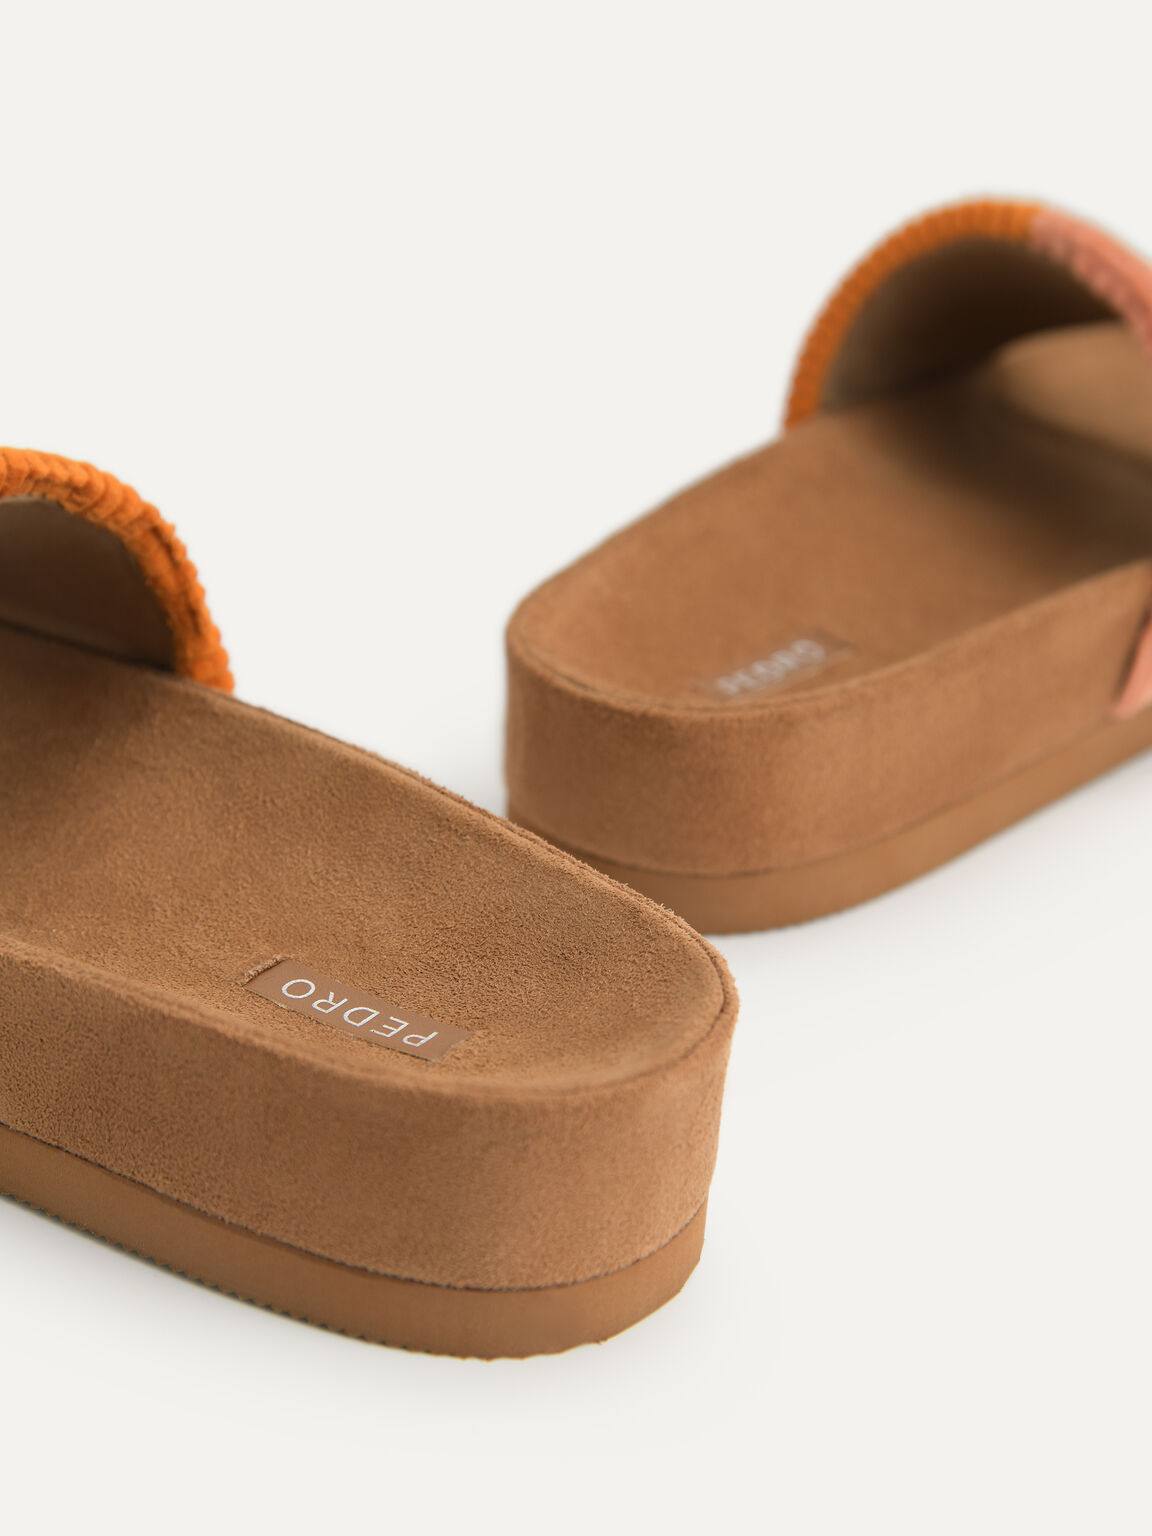 Corduroy Flatform Sandals, Multi, hi-res